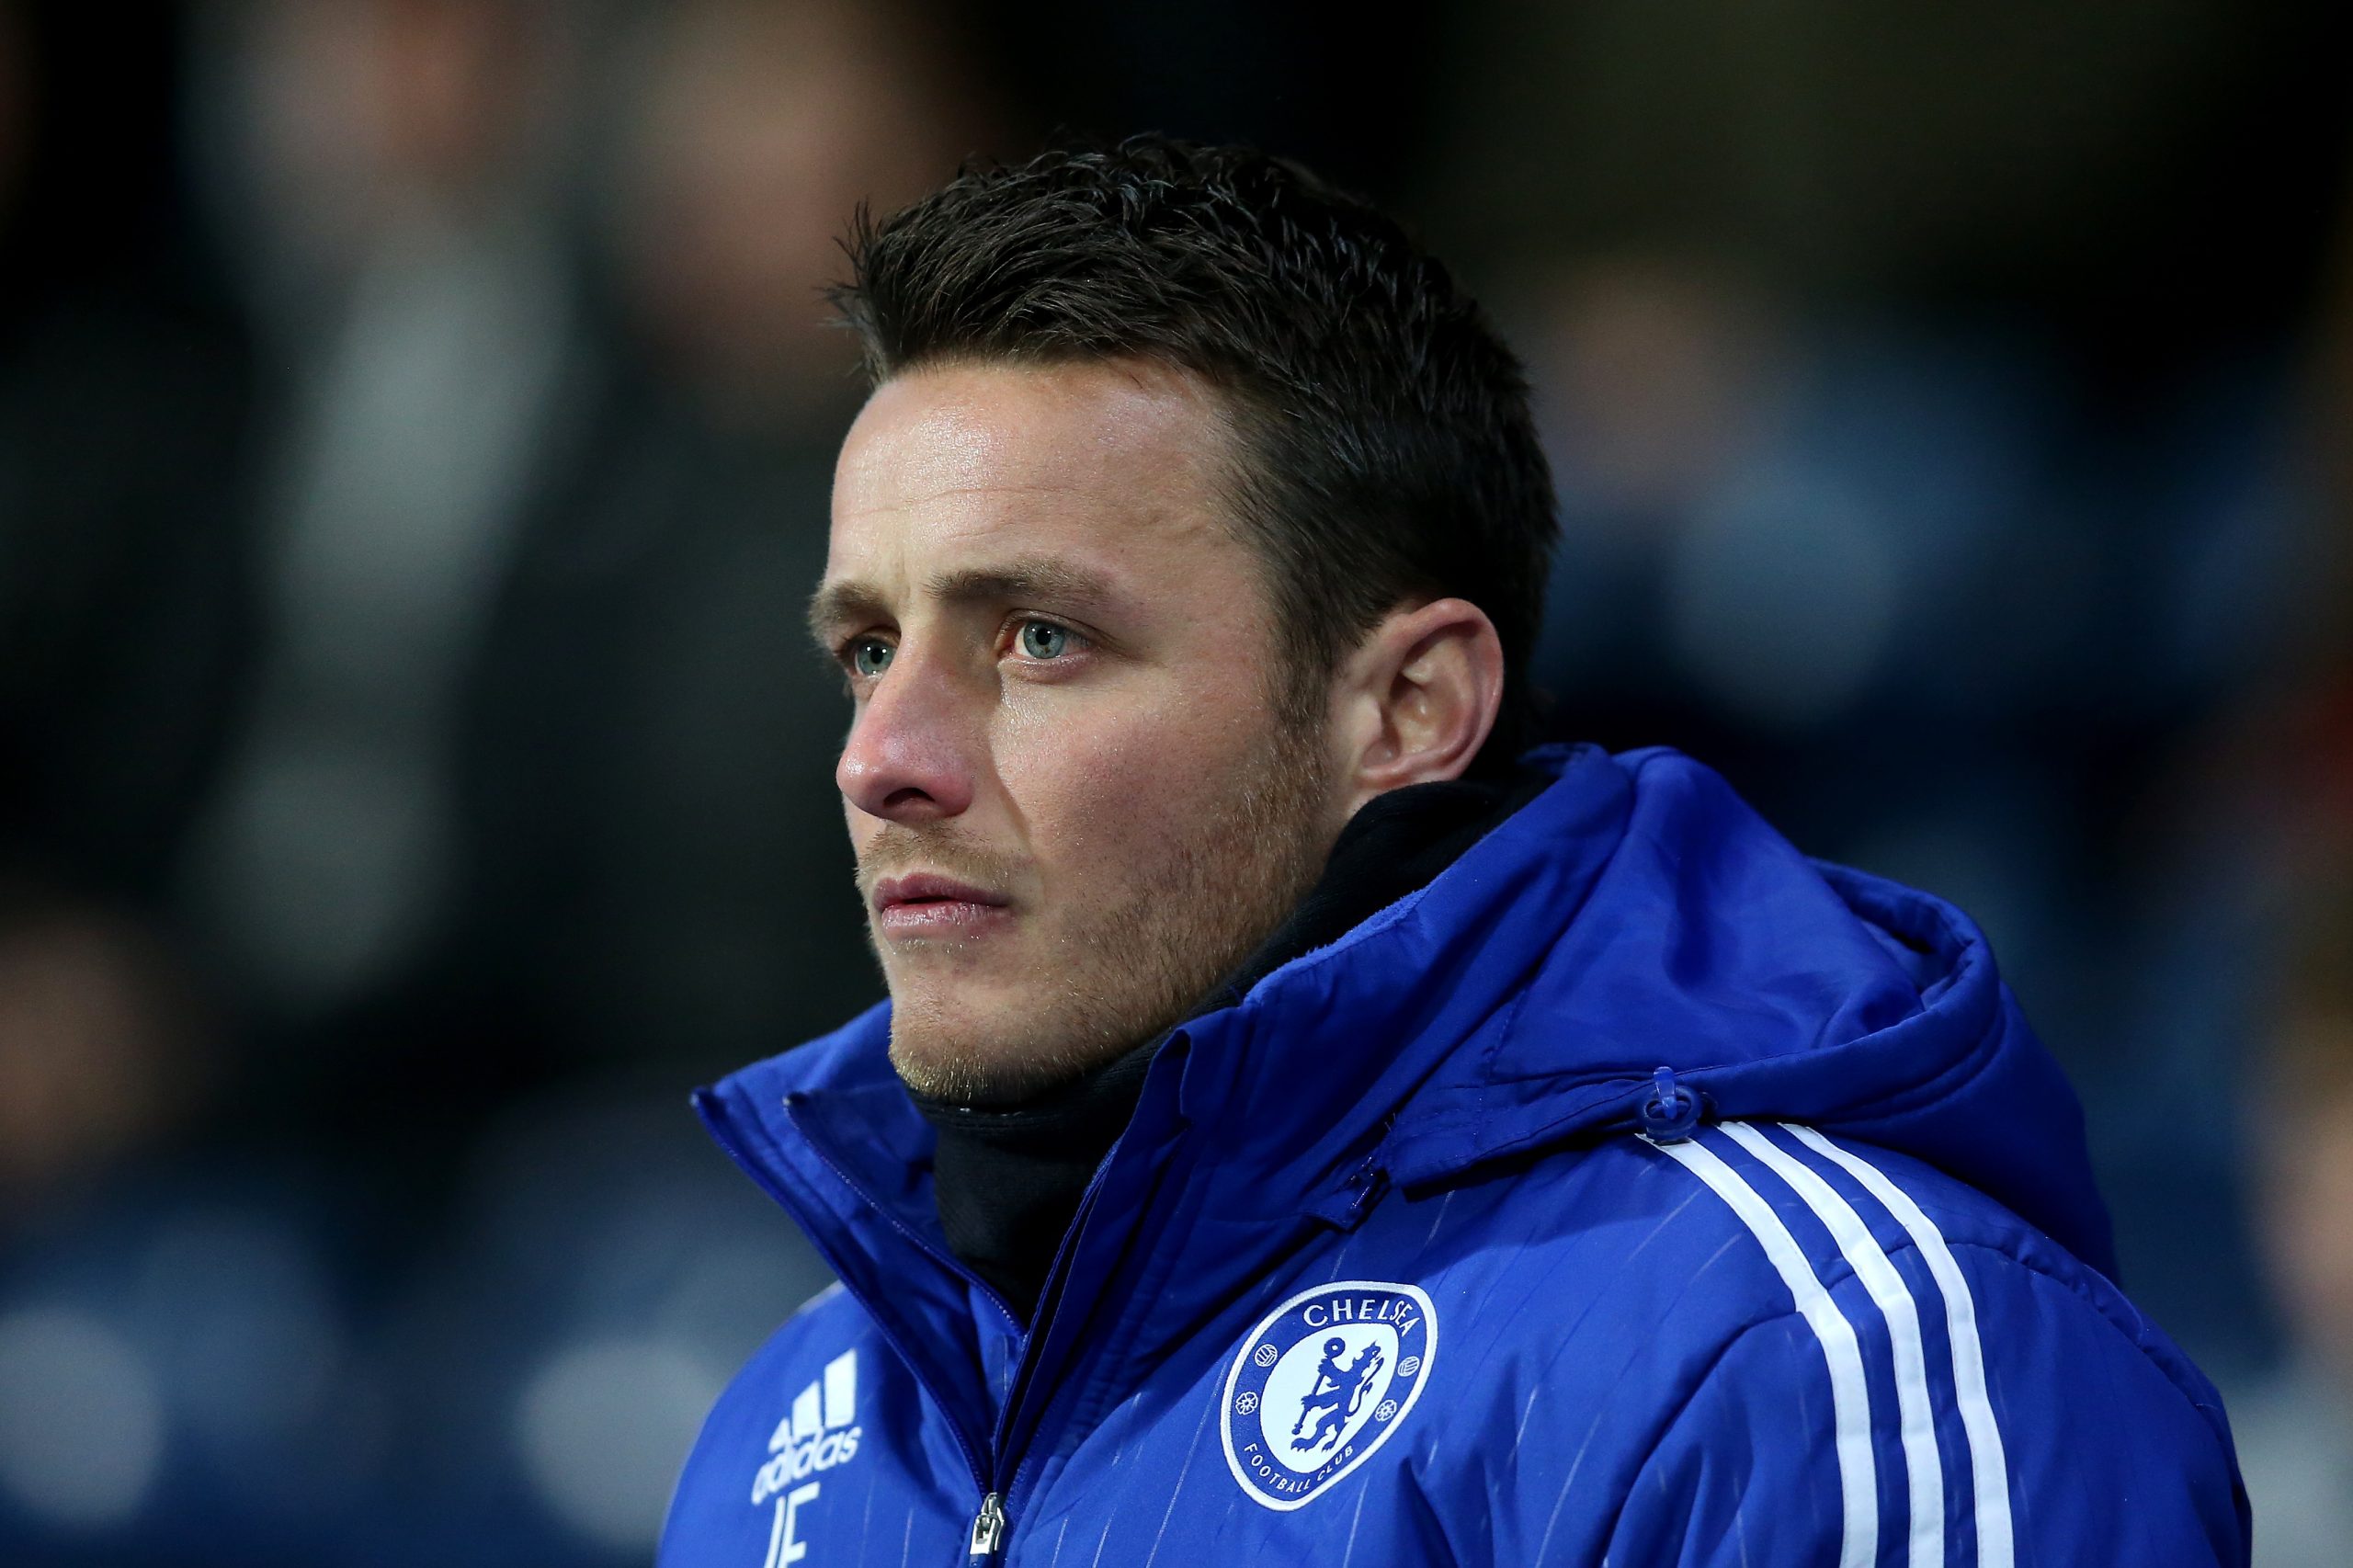 Chelsea assistant coach Joe Edwards joins Frank Lampard at Everton.